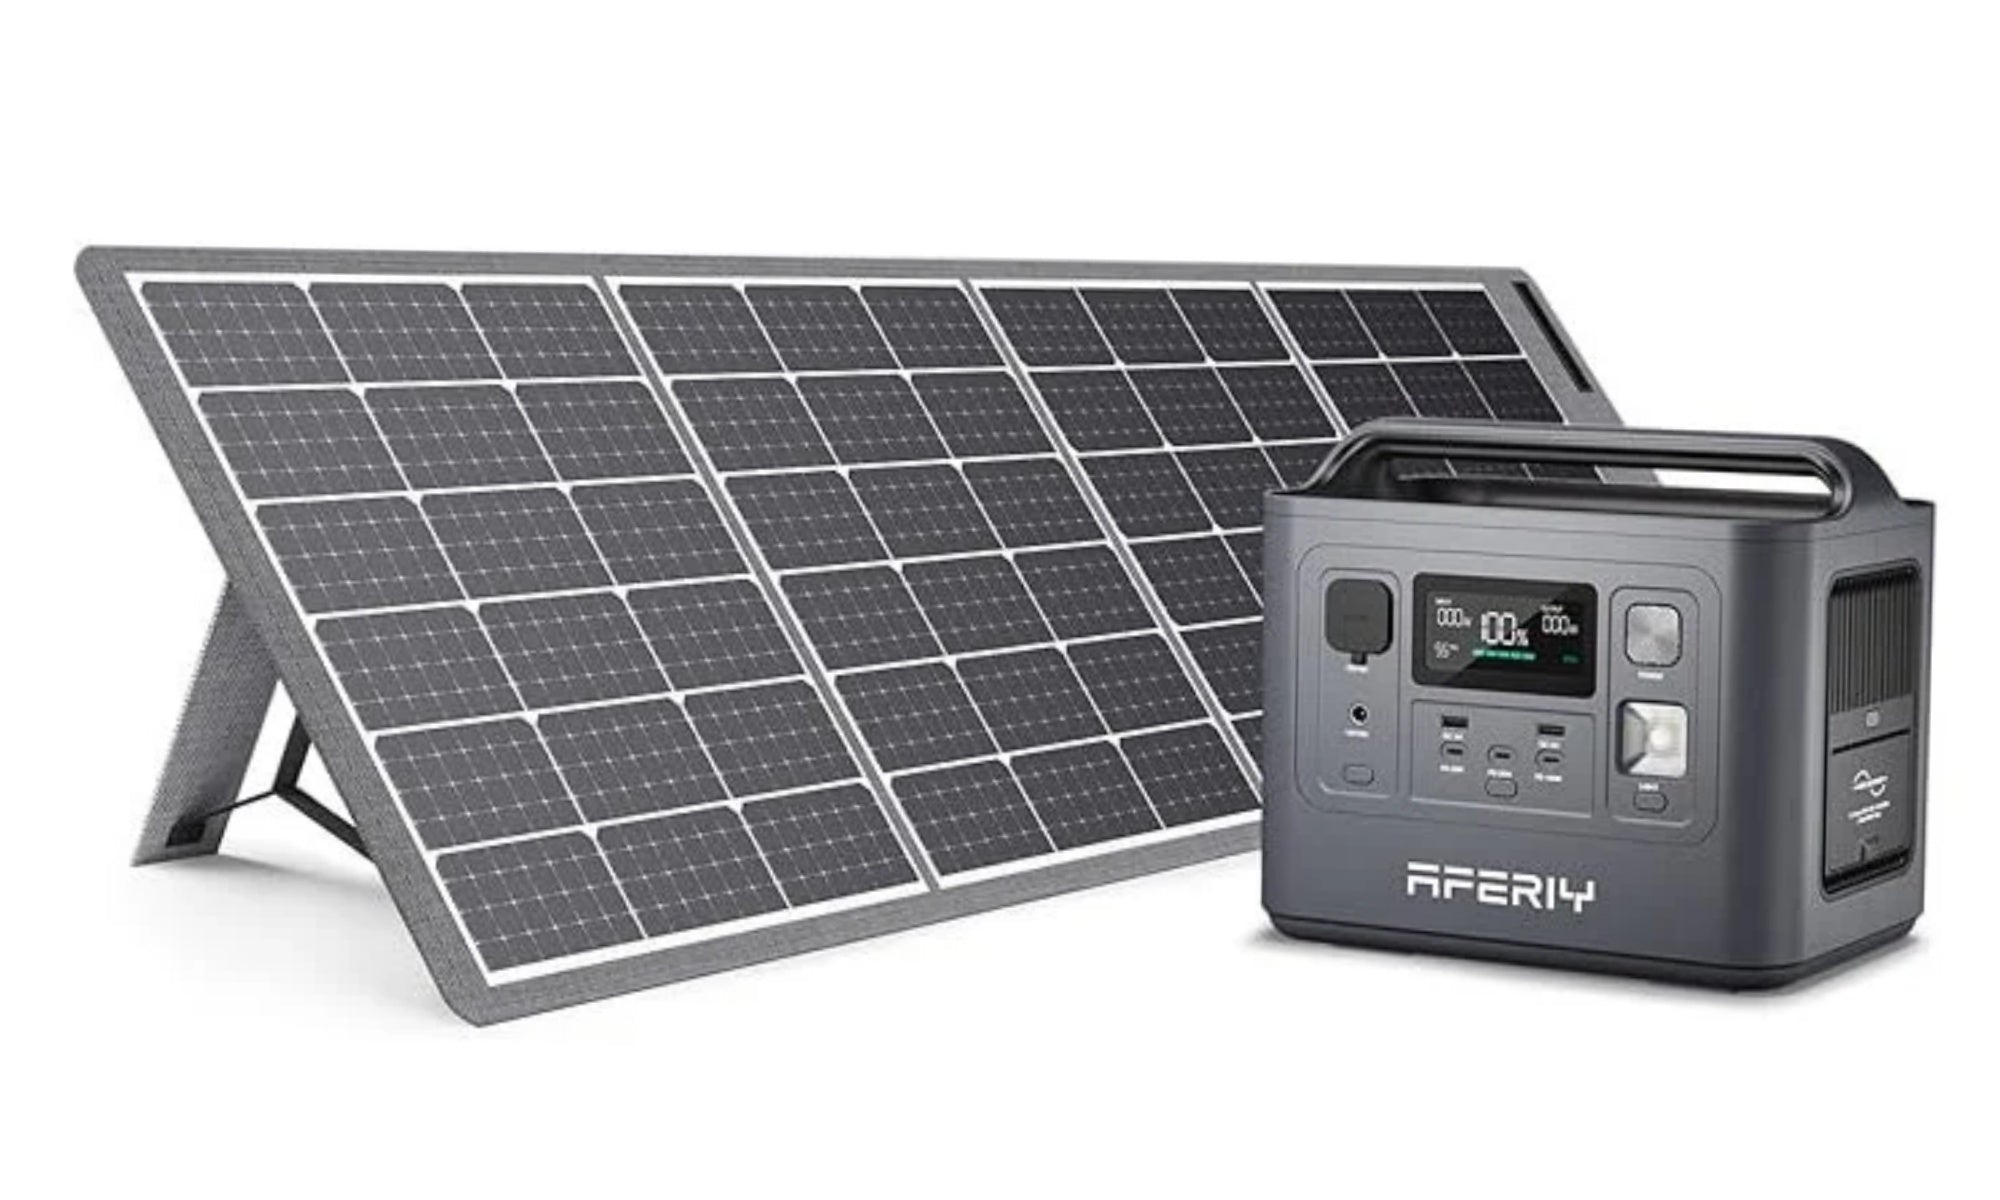 AFERIY 800W Solar Generator Kit